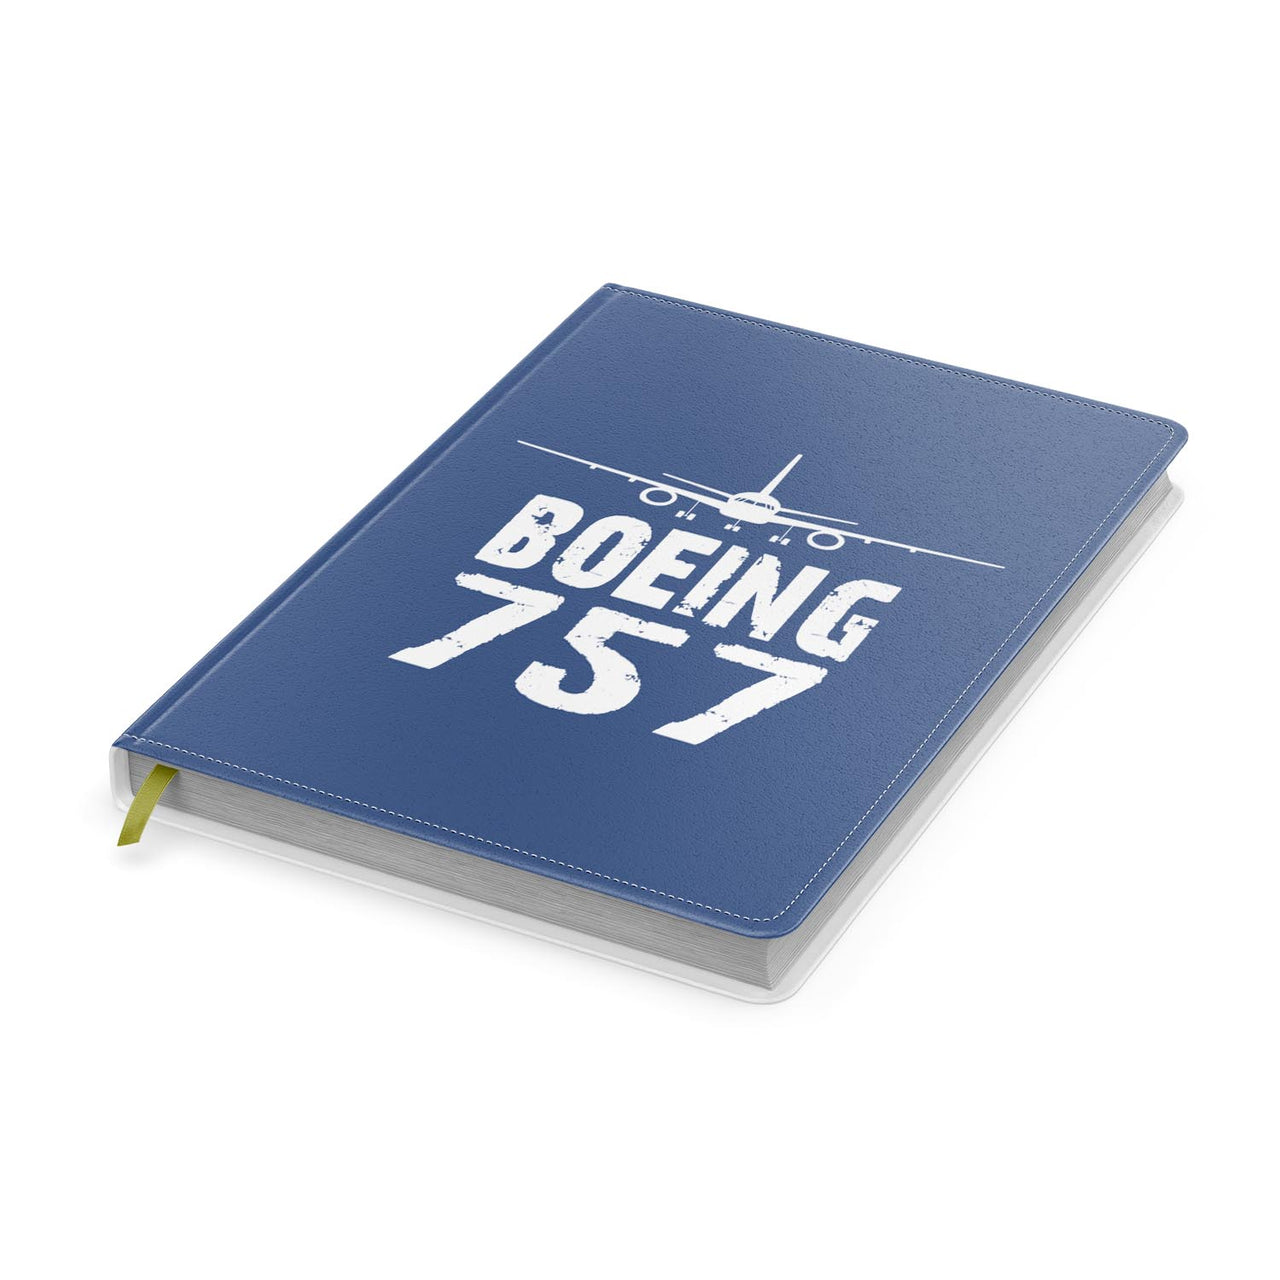 Boeing 757 & Plane Designed Notebooks